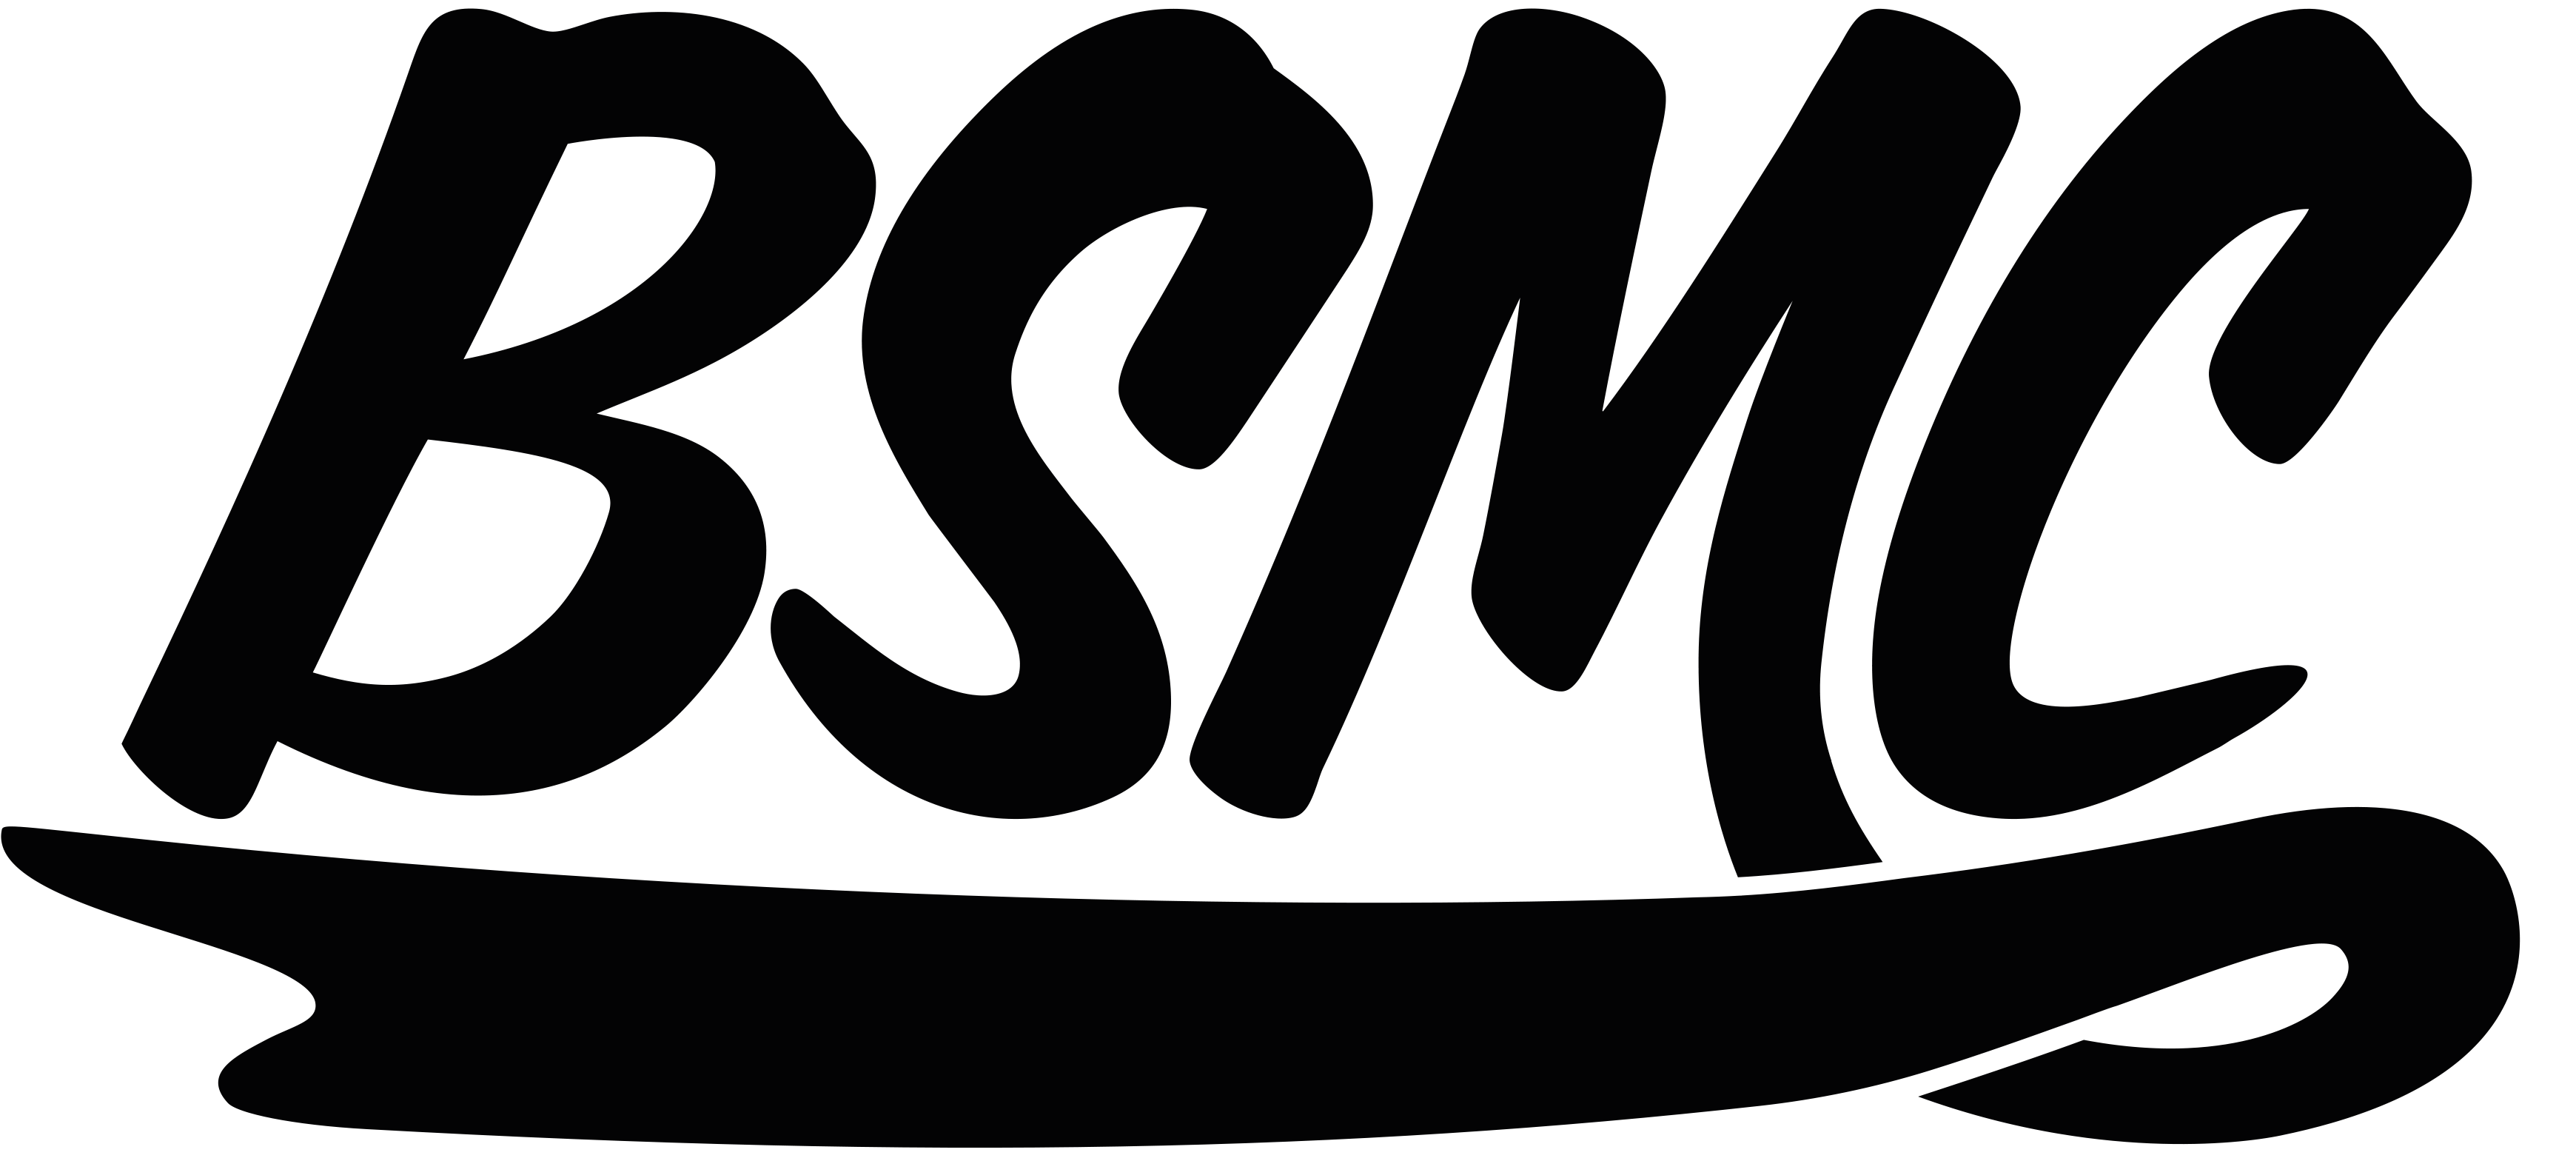 BSMC Logo - BSMC Flat Swoosh-3 - The Bike Shed